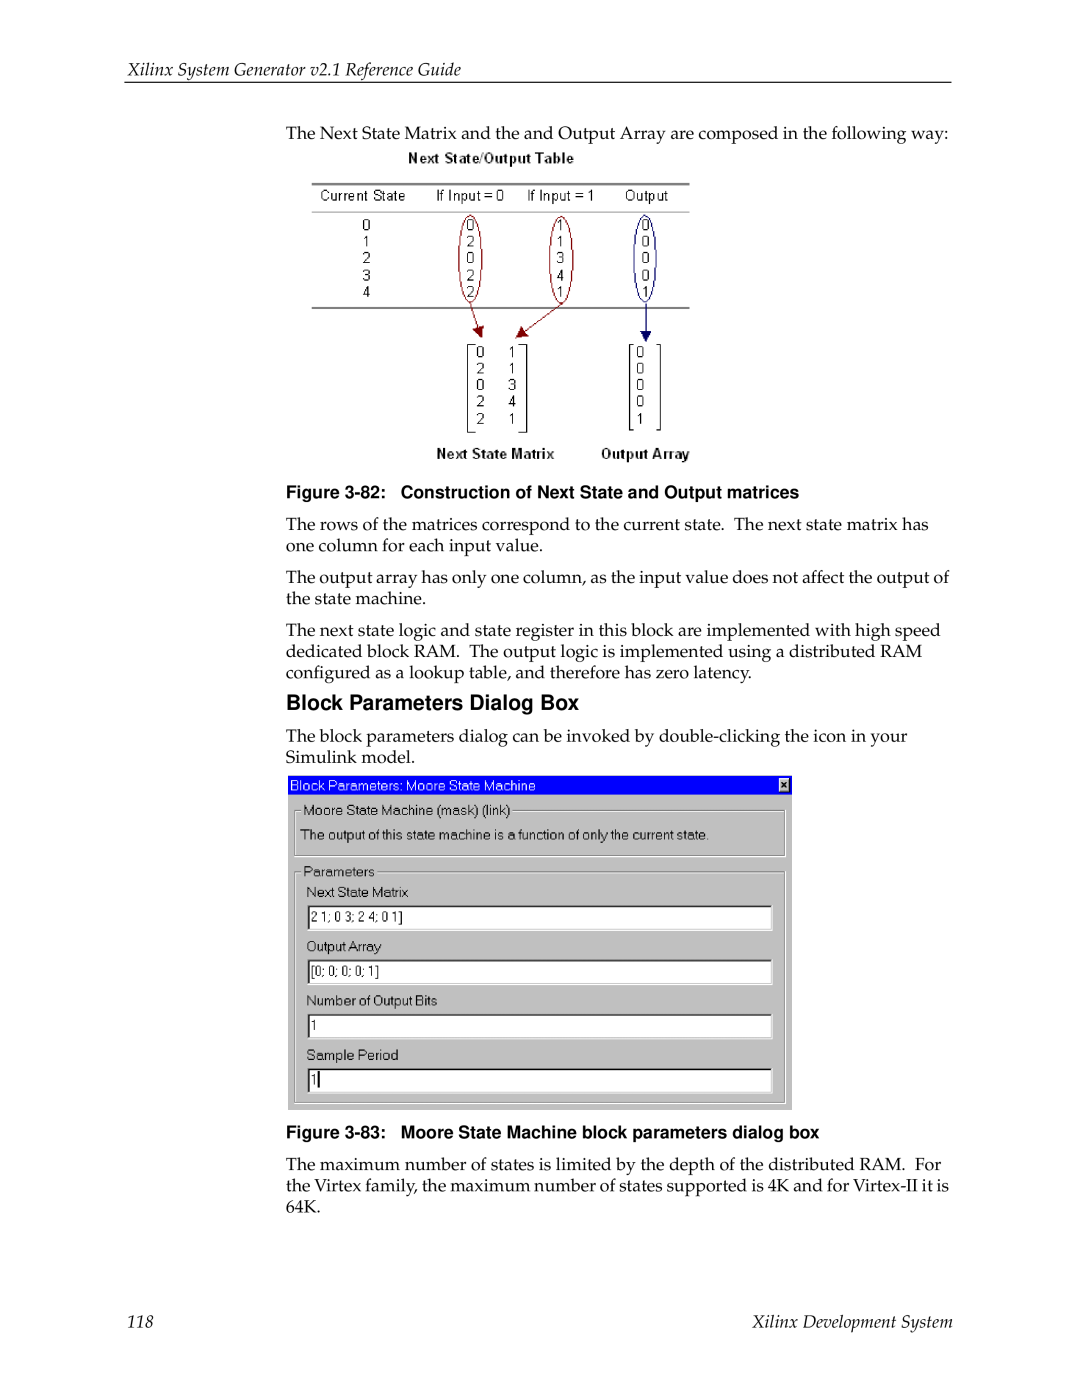 Xilinx V2.1 manual Block Parameters Dialog Box, Xilinx System Generator v2.1 Reference Guide, Xilinx Development System 